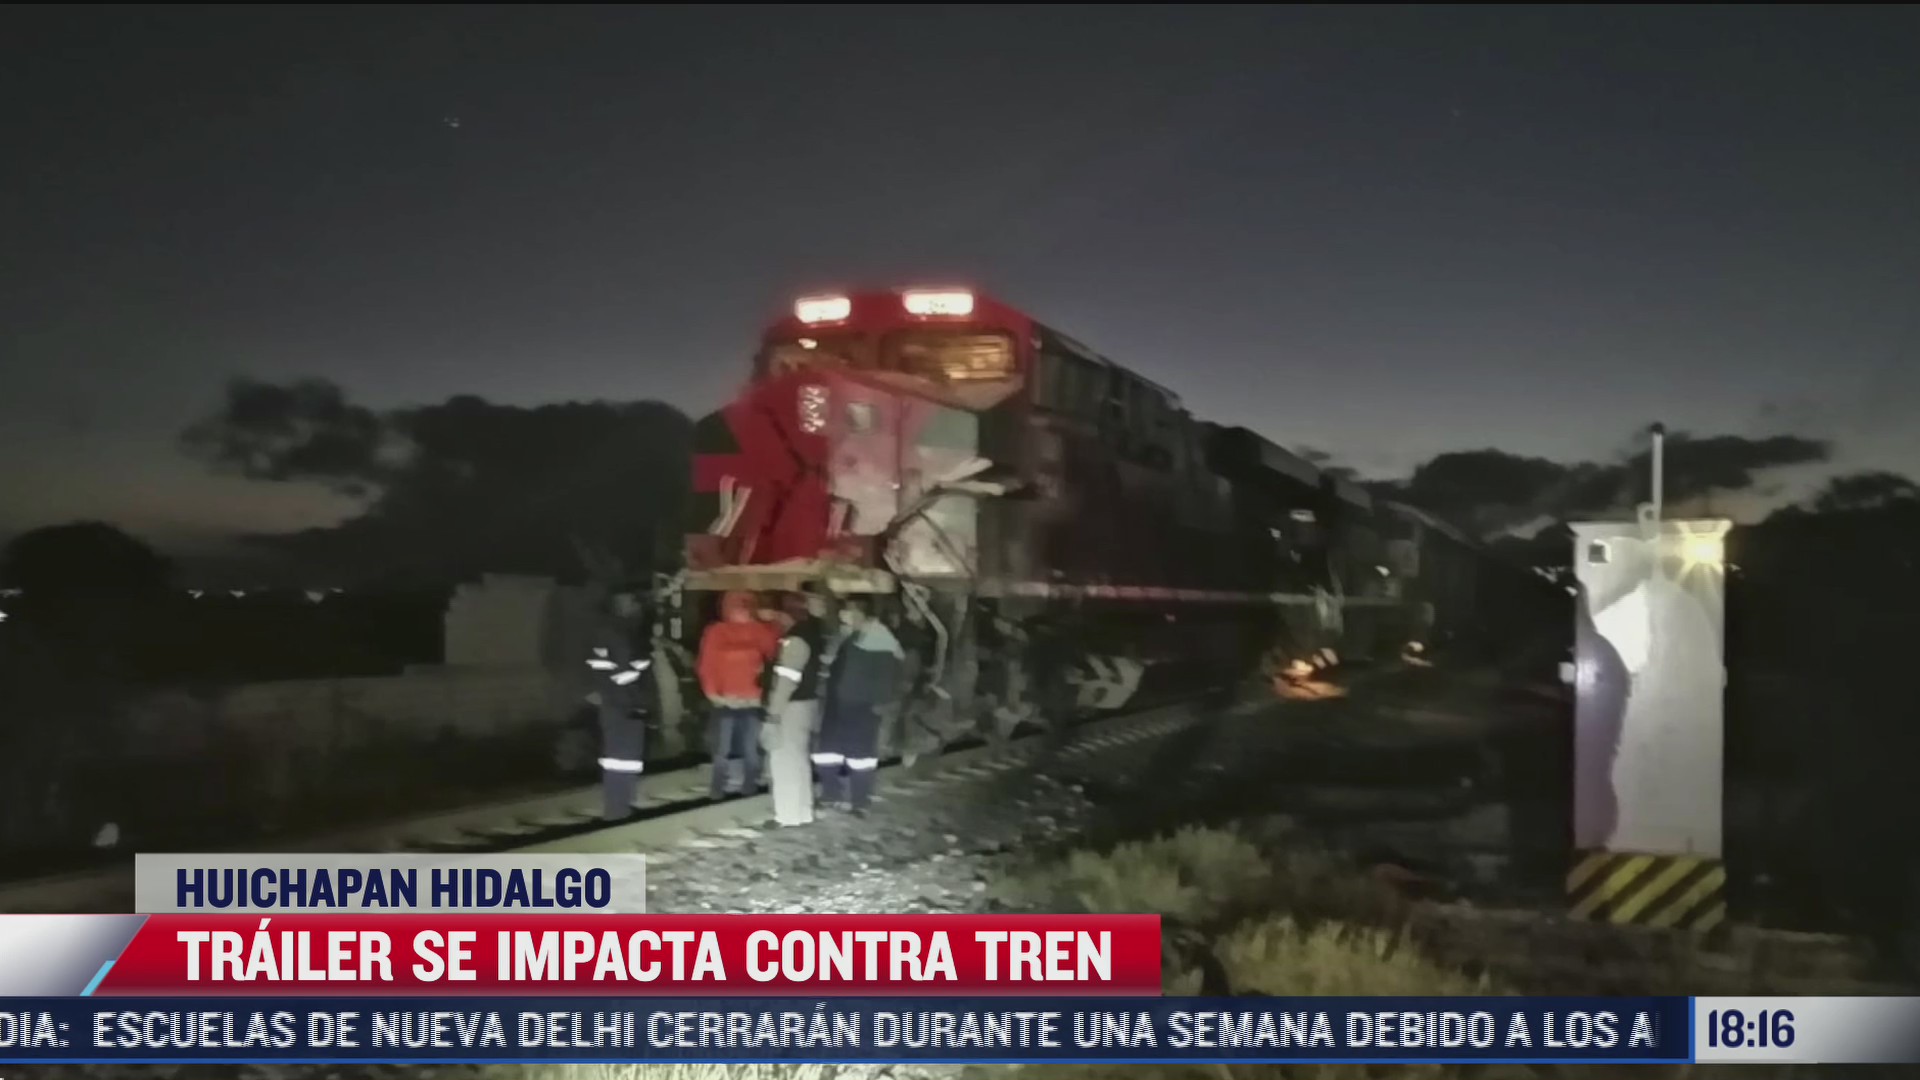 trailer se impacta contra tren en huichapan hidalgo